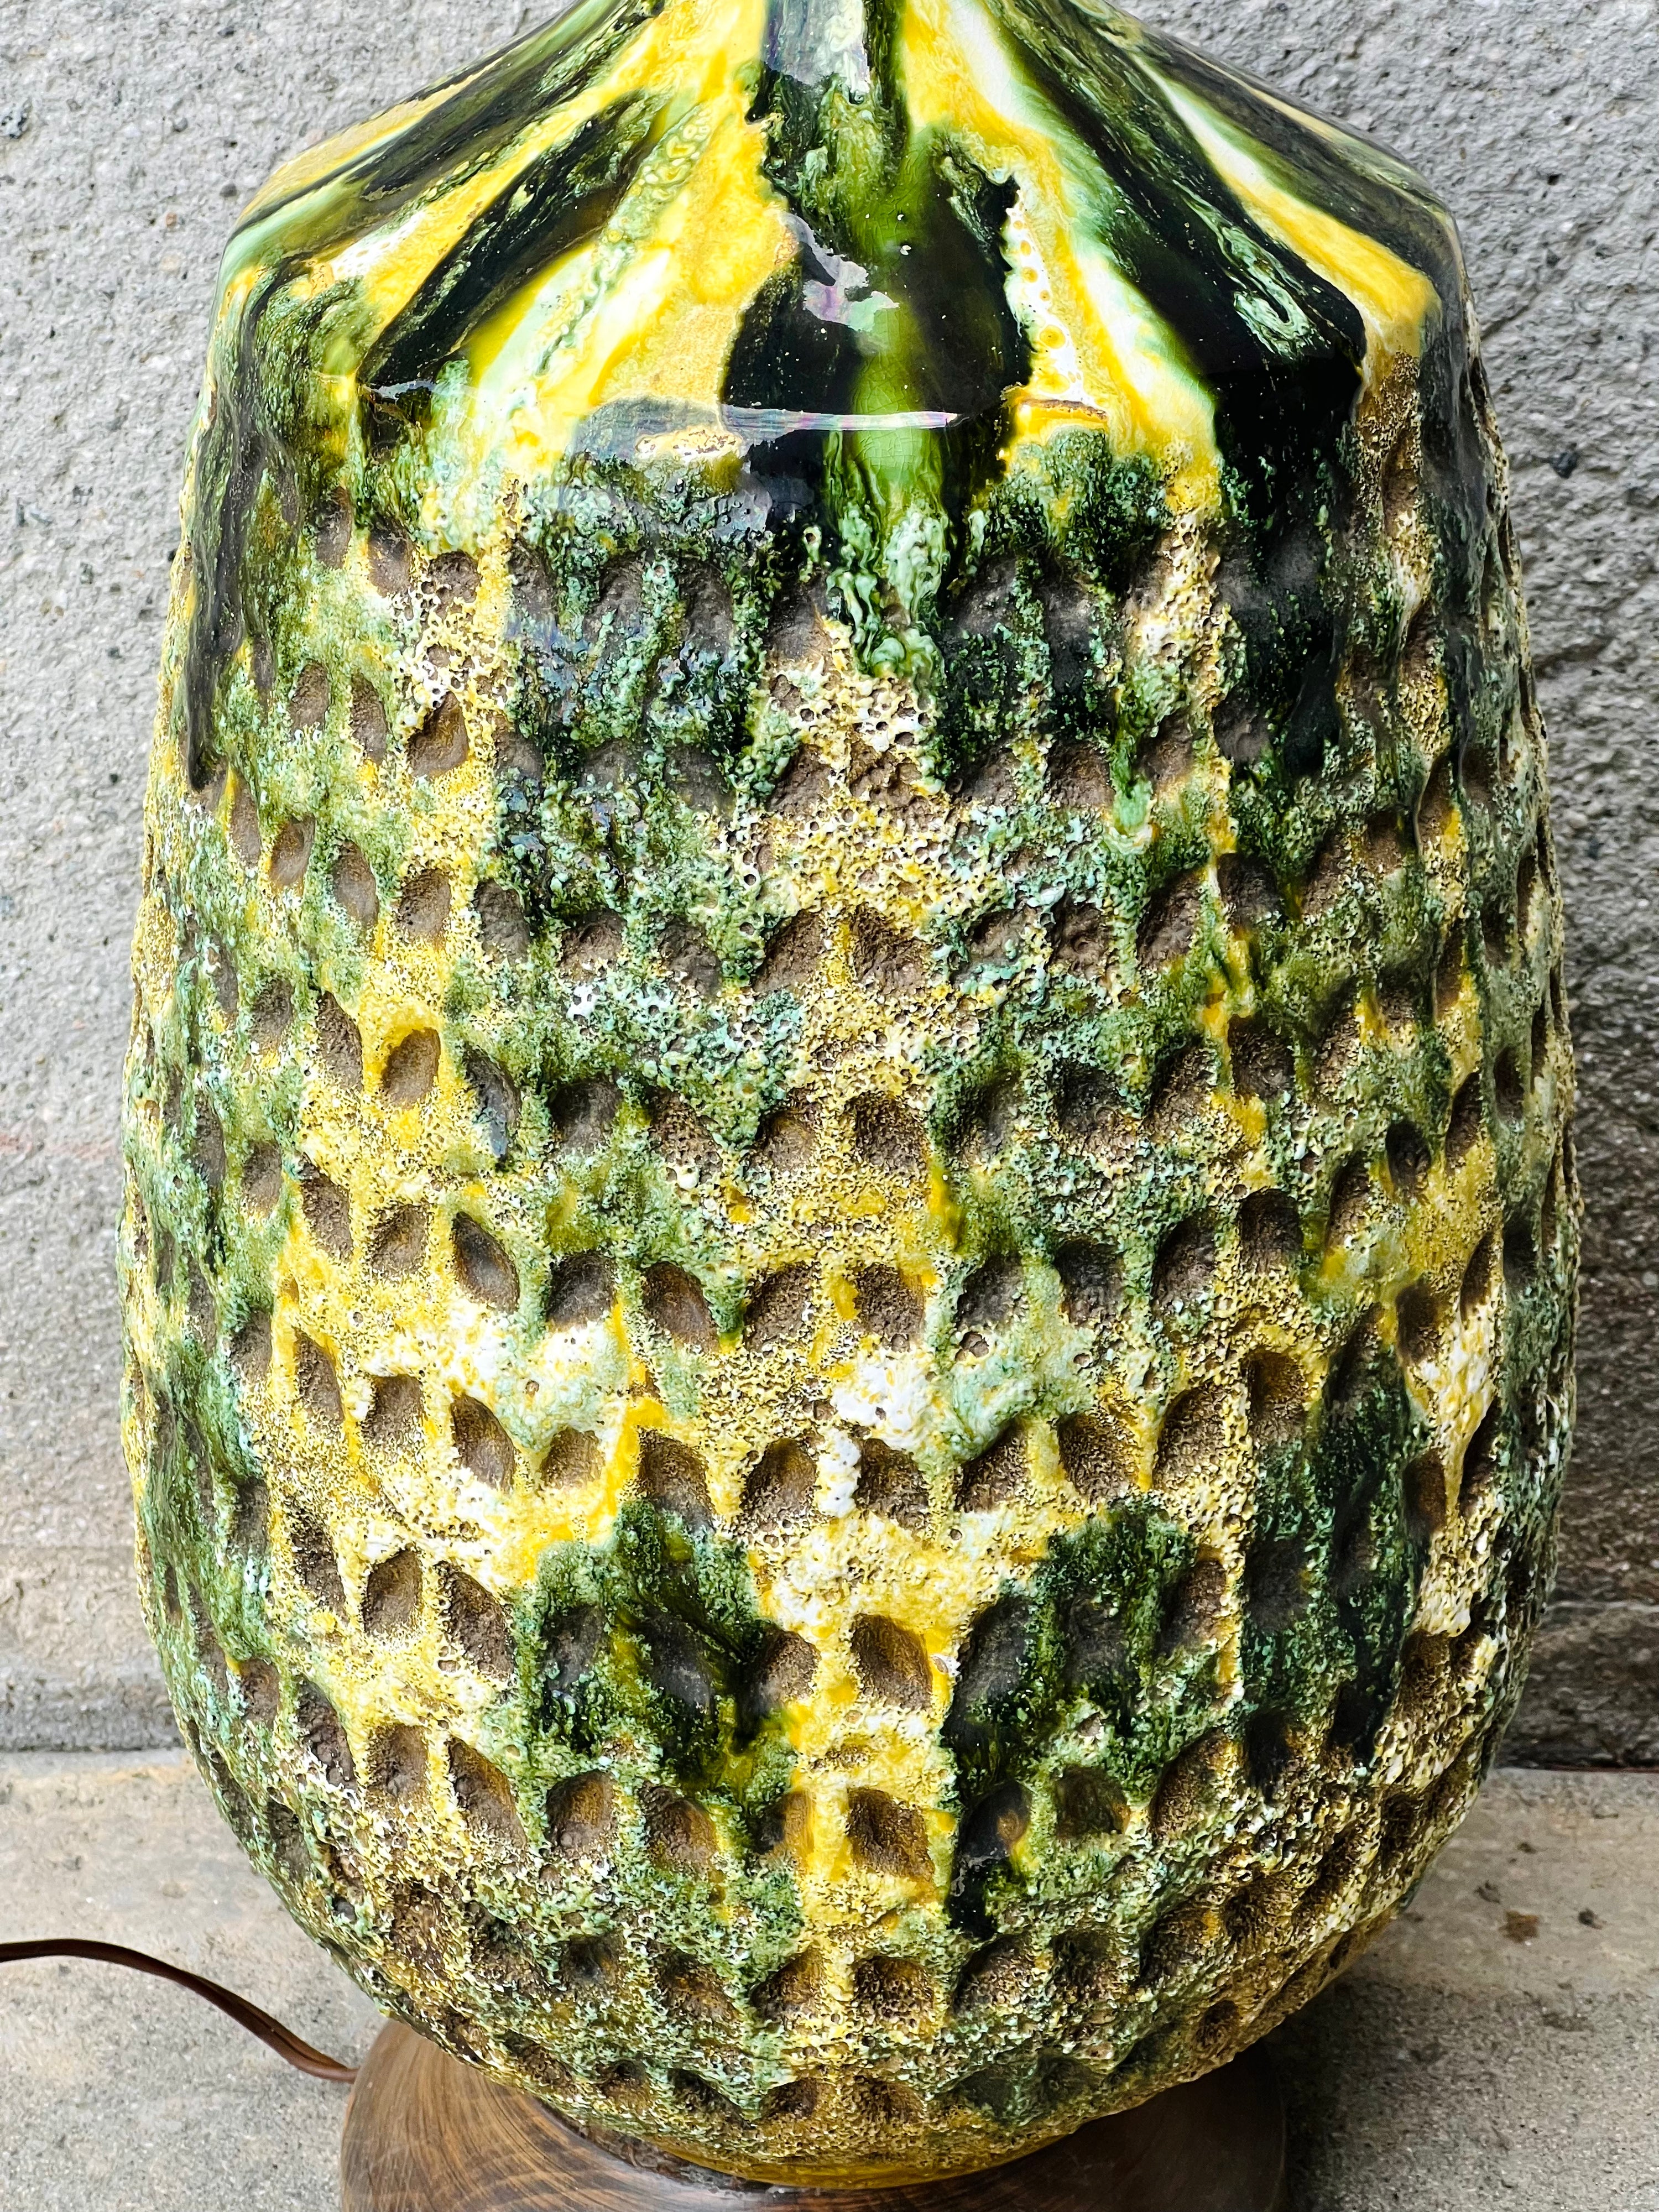 Original Mid-Century Ceramic Green and Yellow Pineapple Style Lamp (Vintage)